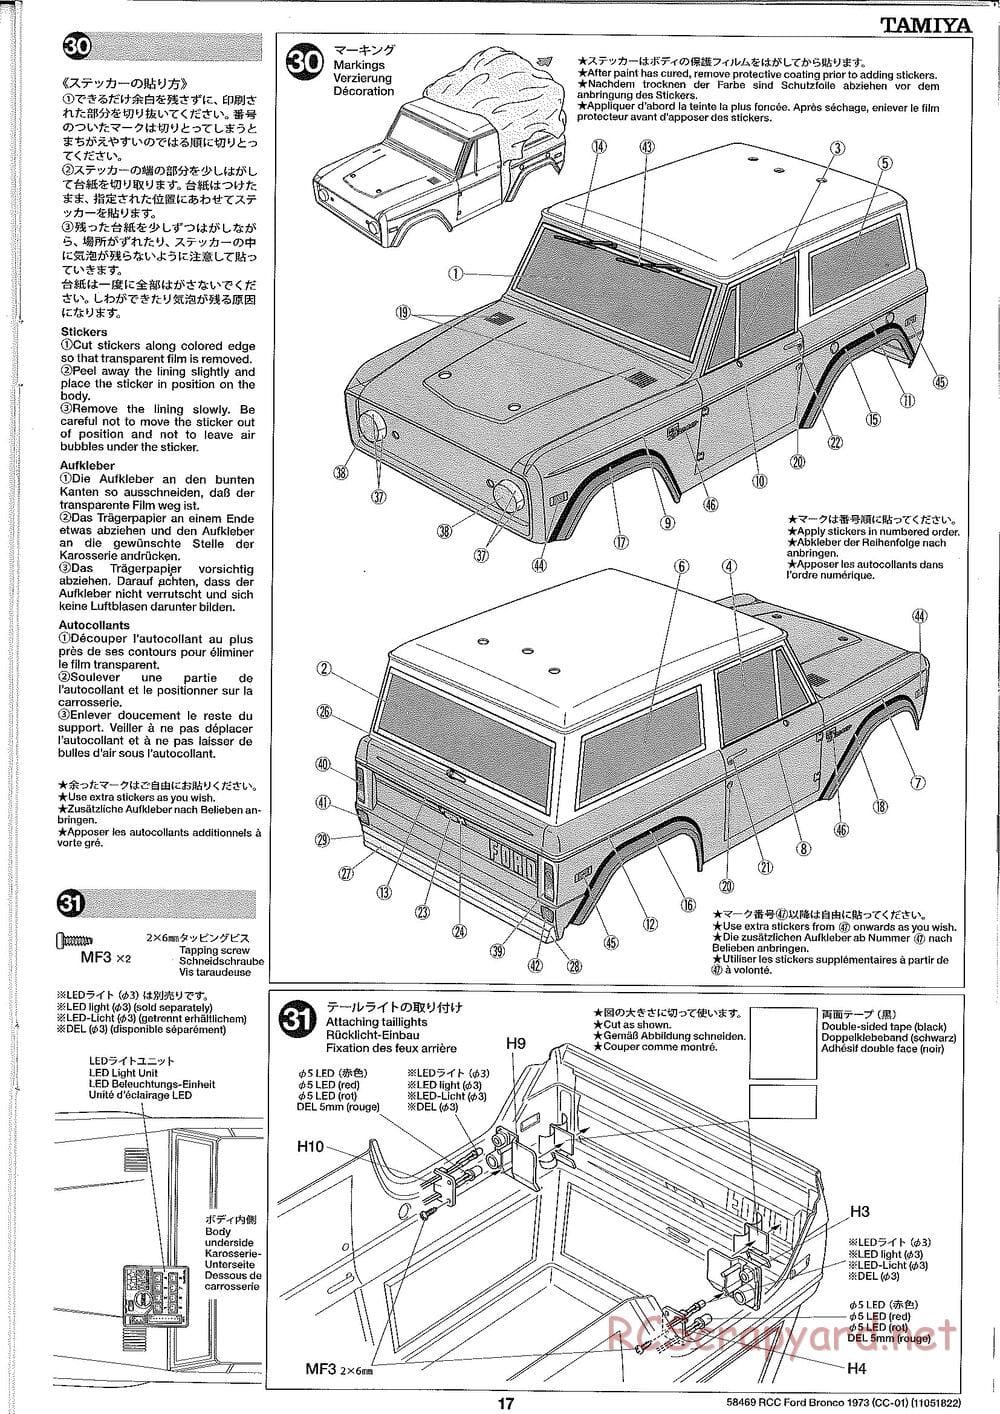 Tamiya - Ford Bronco 1973 - CC-01 Chassis - Manual - Page 17